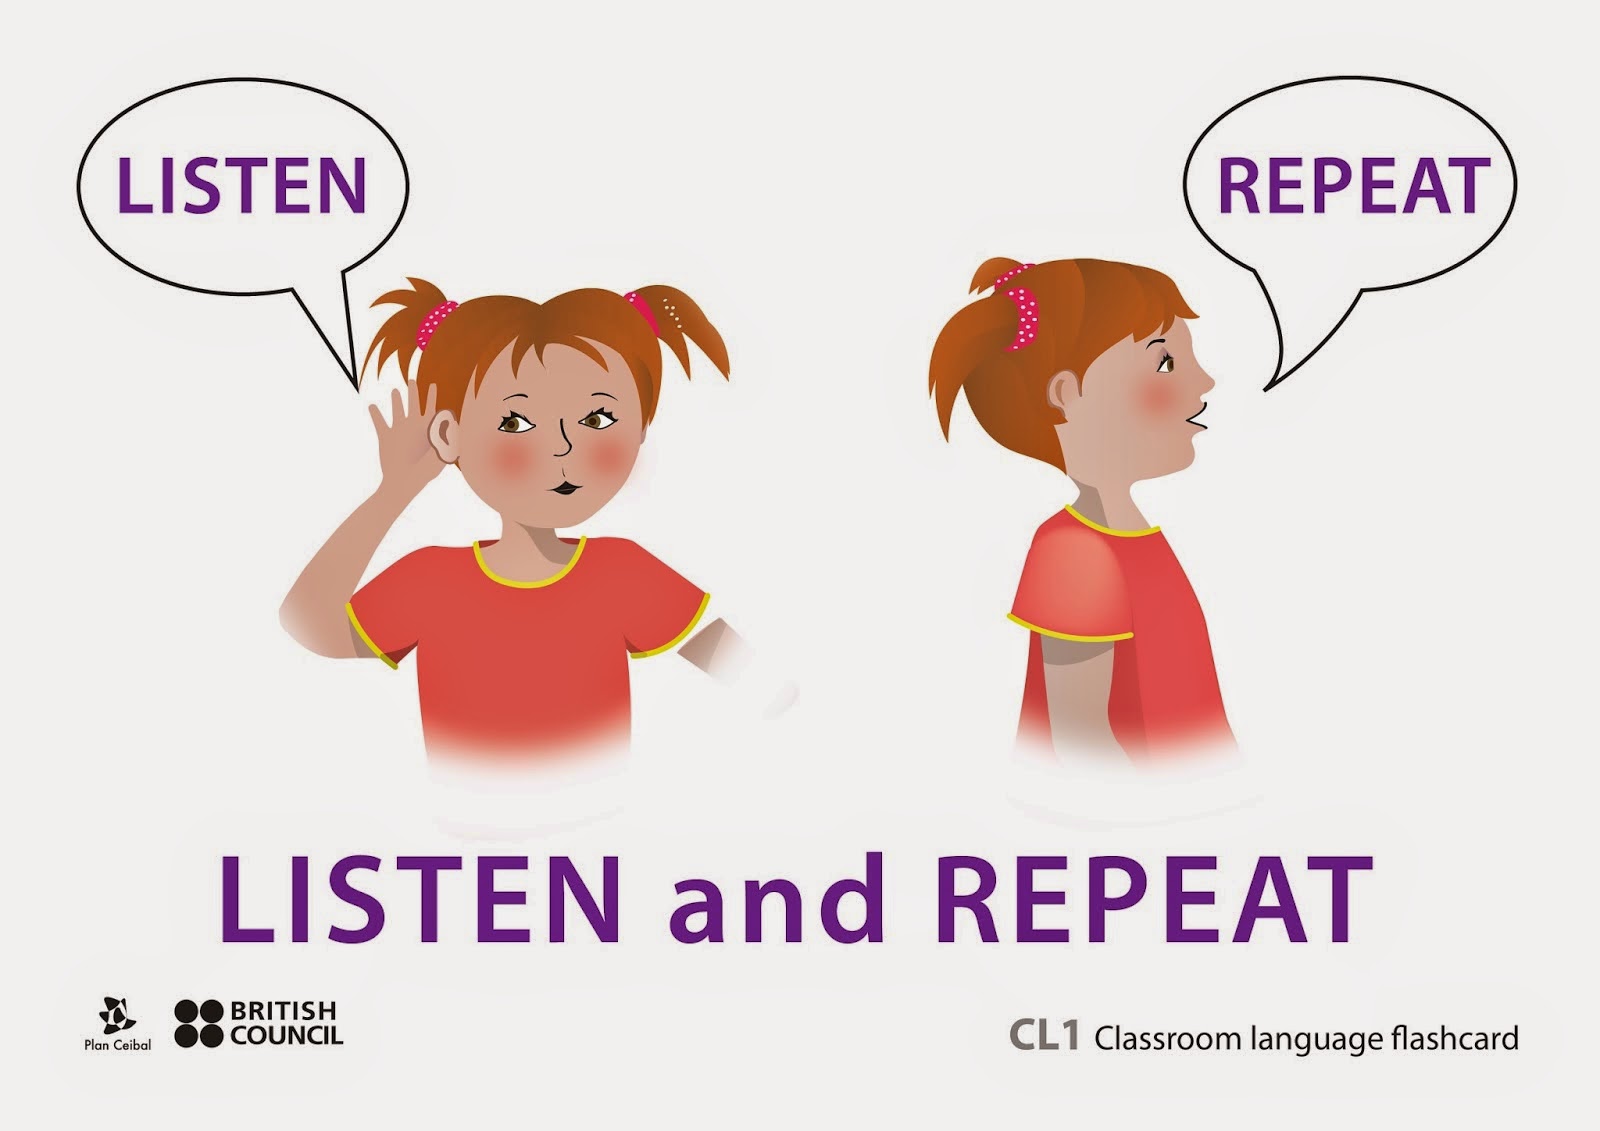 Listening and doing games. Аудирование и говорение. Listen and repeat. Listen картинка для детей. Repeat картинка.